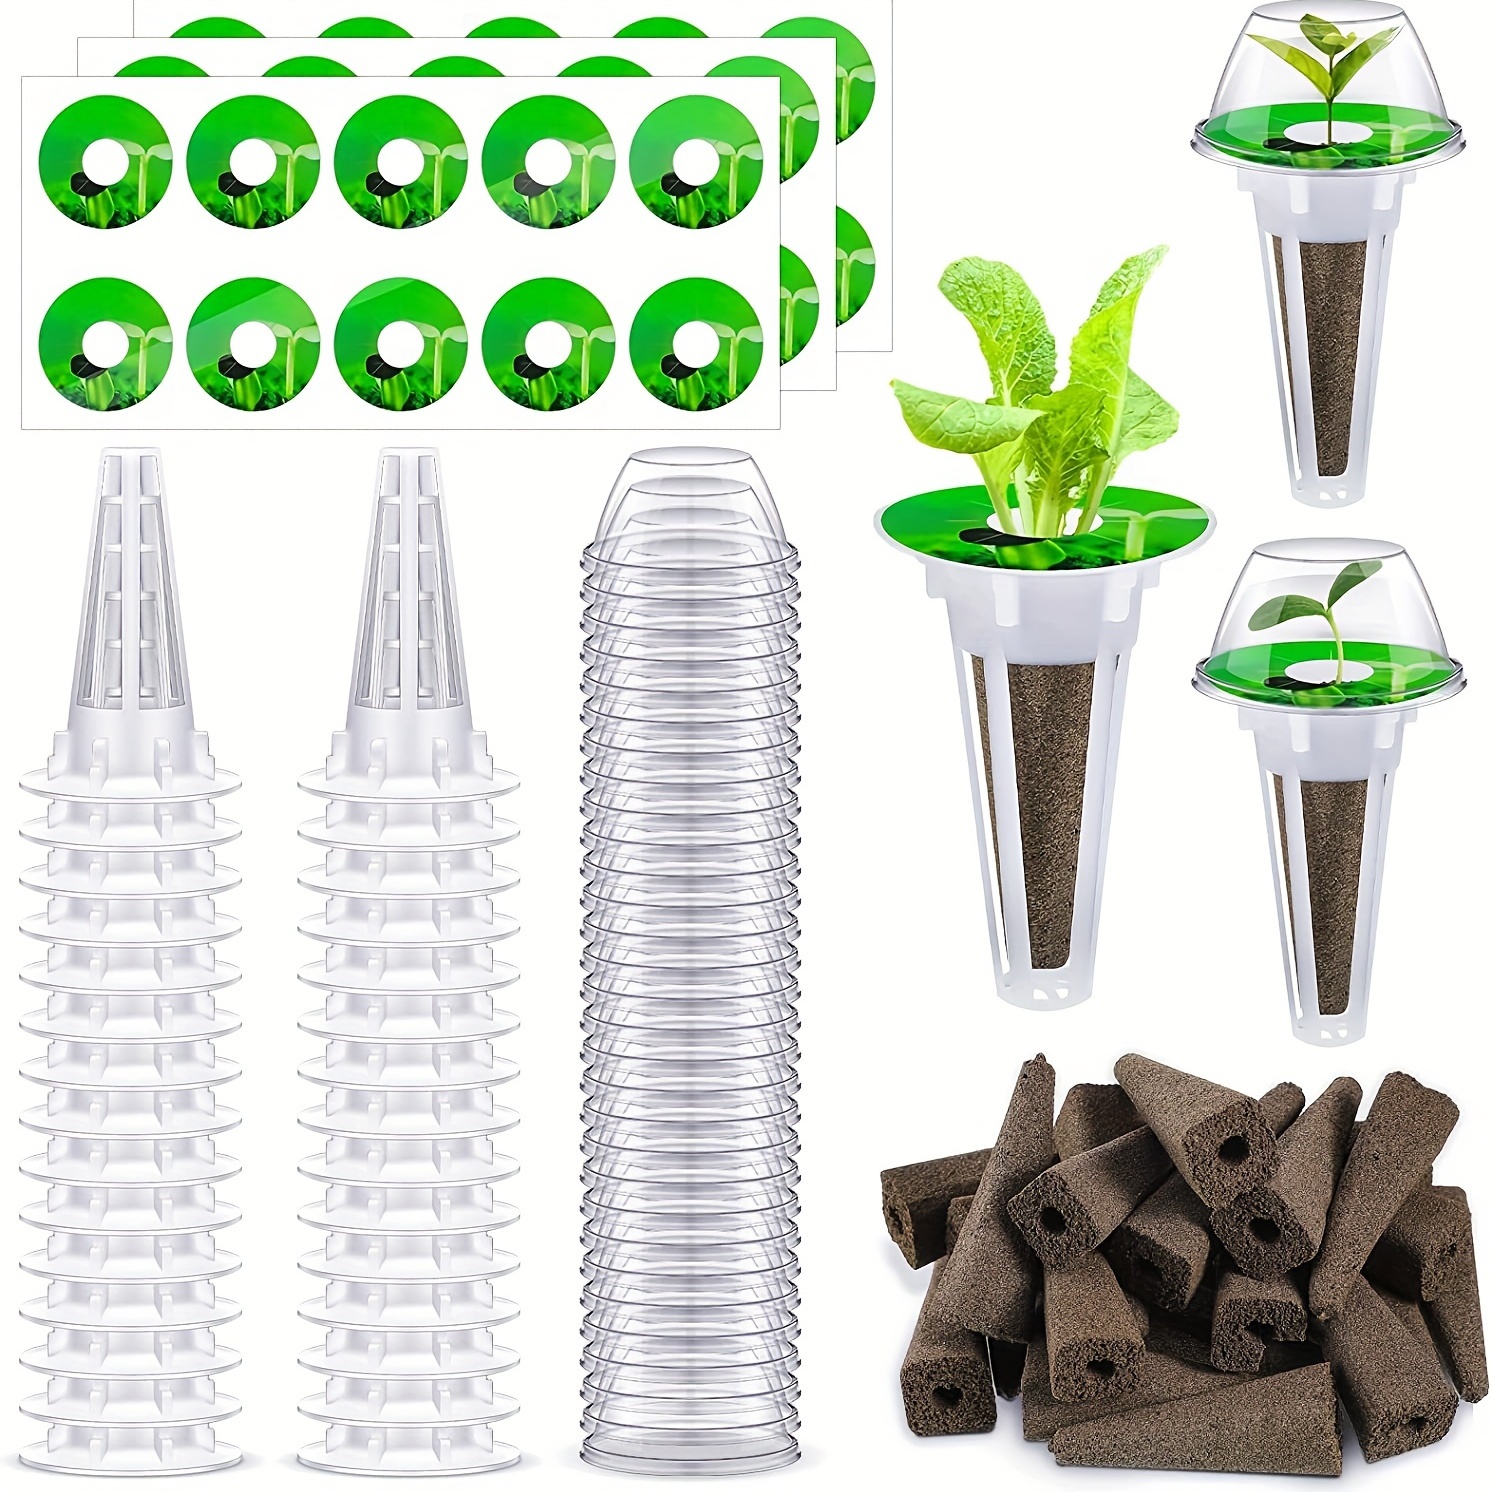 

40pcs Hydroponic Garden Accessories Plant Pod Kit Aero Growing Kit